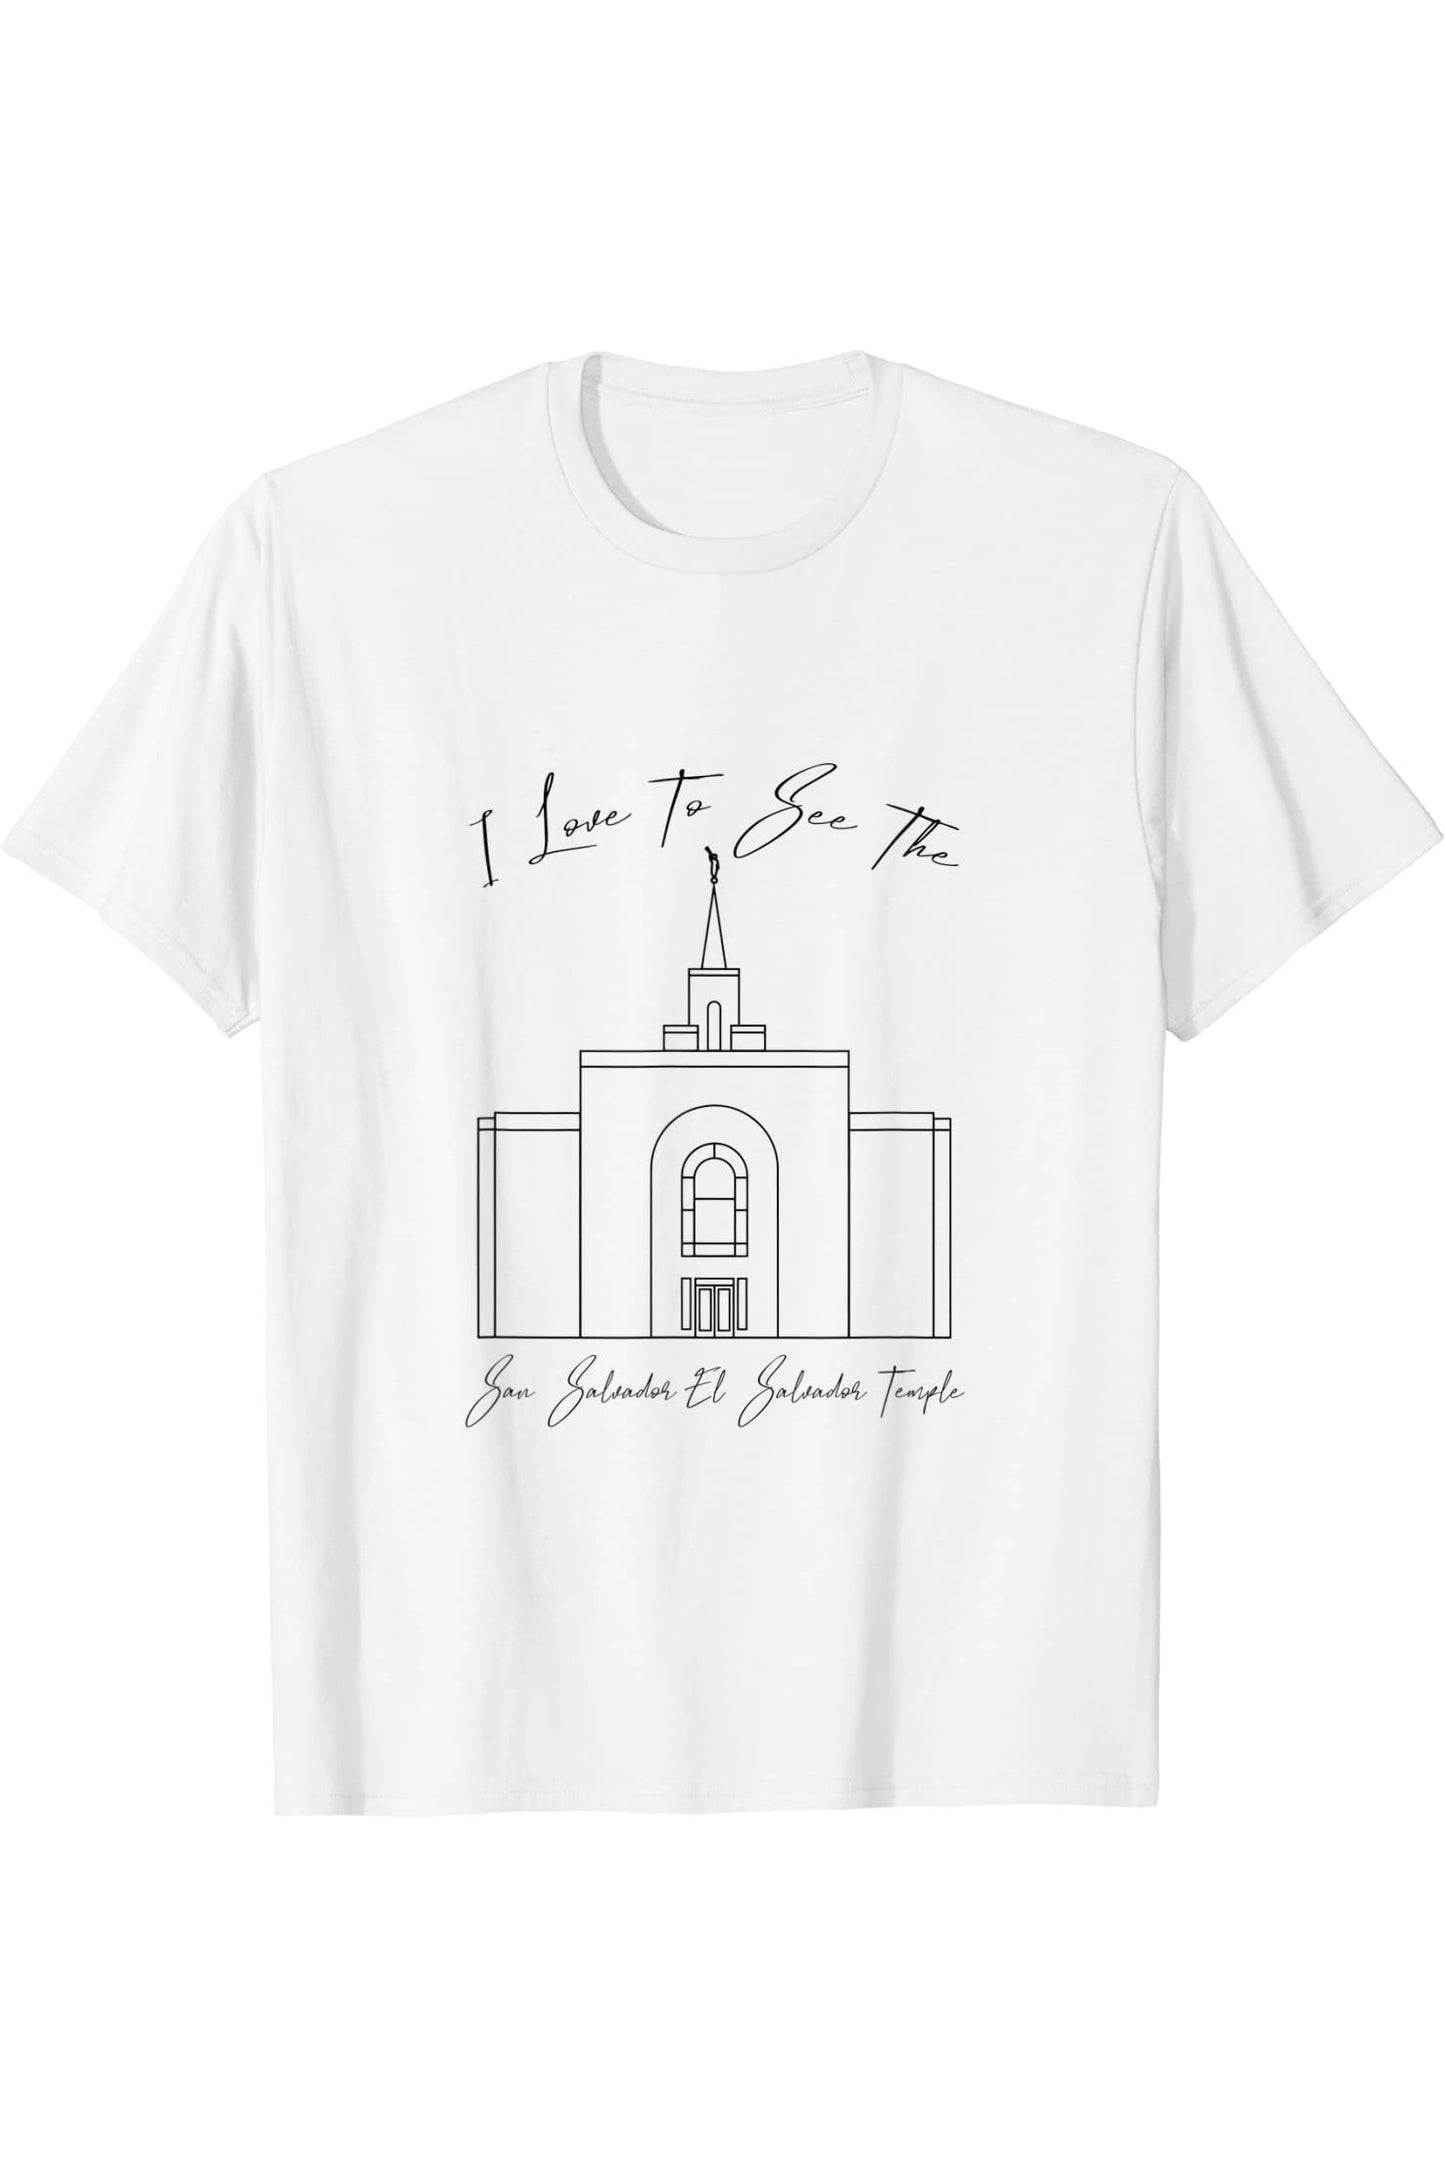 San Salvador El Salvador Temple T-Shirt - Calligraphy Style (English) US